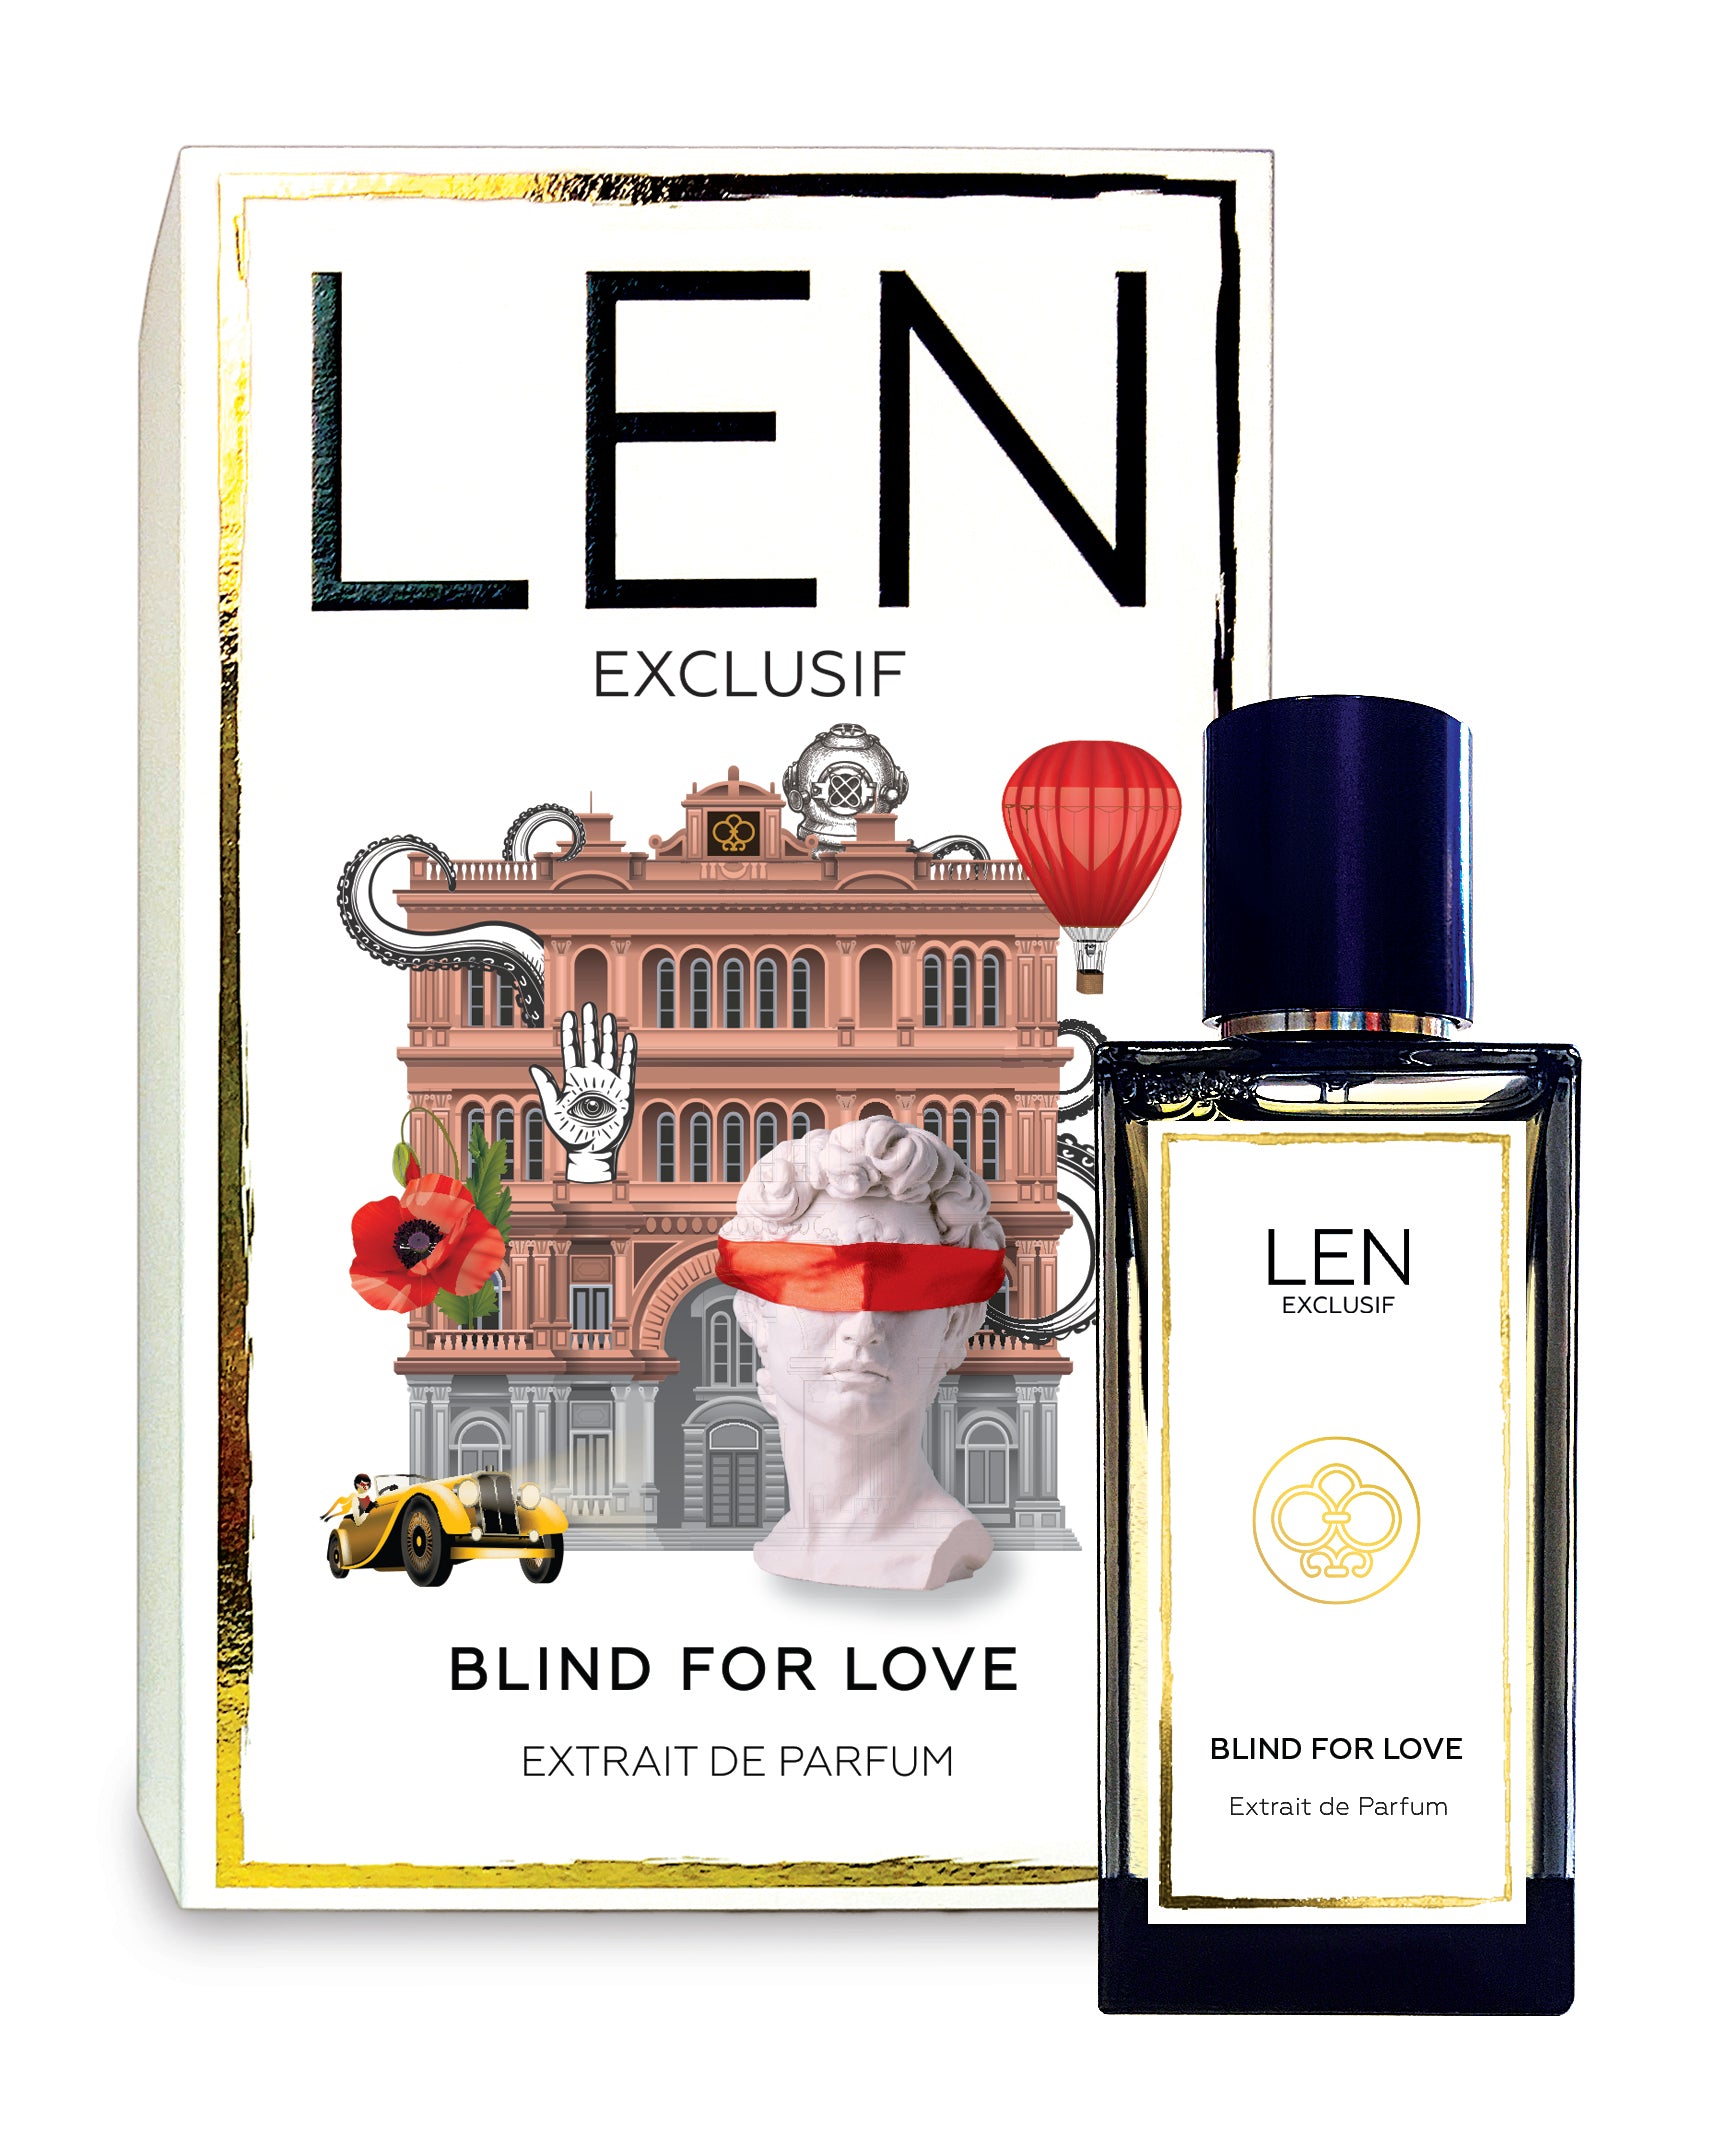 Blind For Love 50 ml Extract de Parfum PREORDER